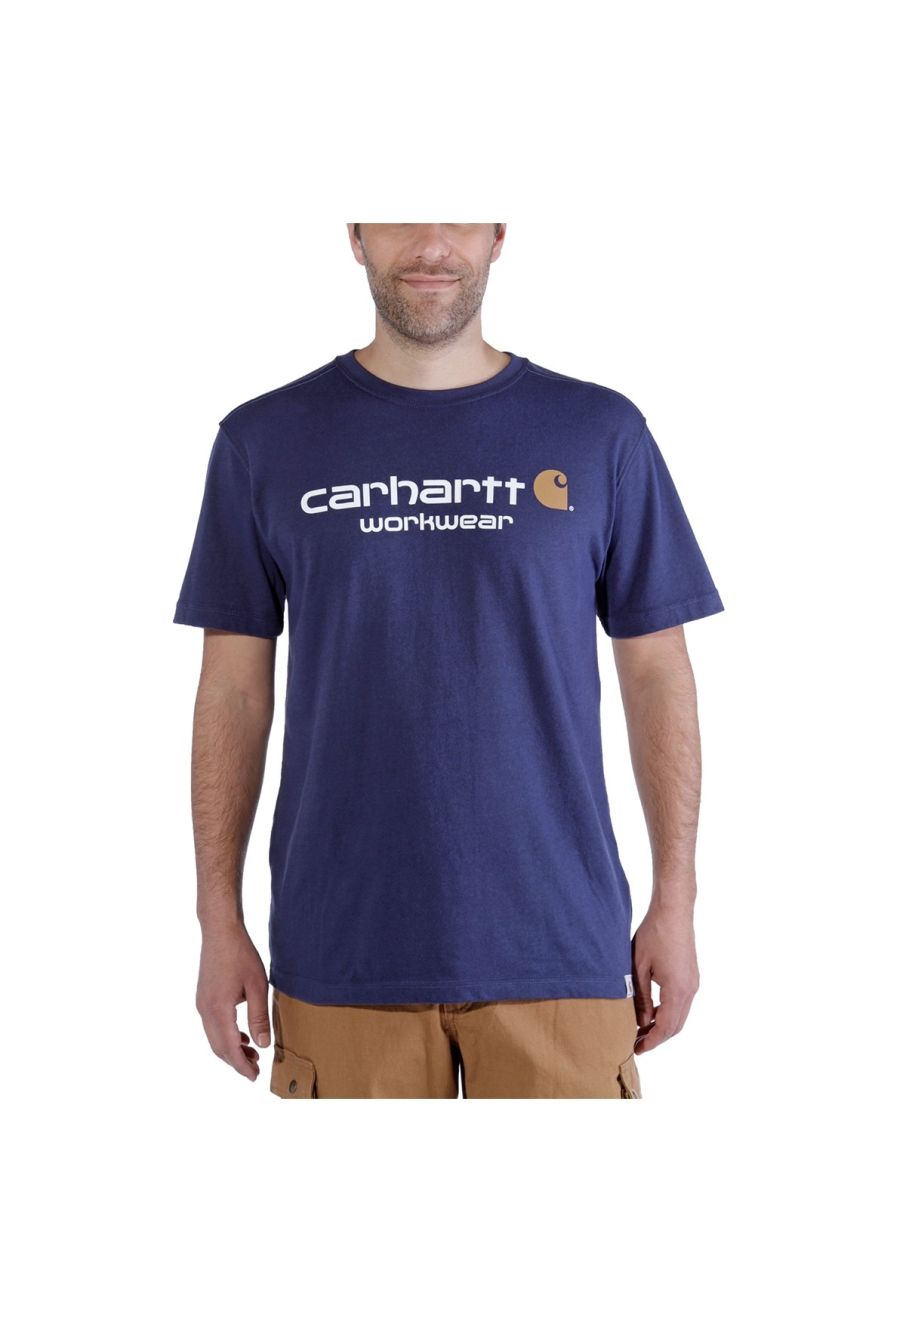 T-Shirt Carhartt Core s/s Logo White - 101214